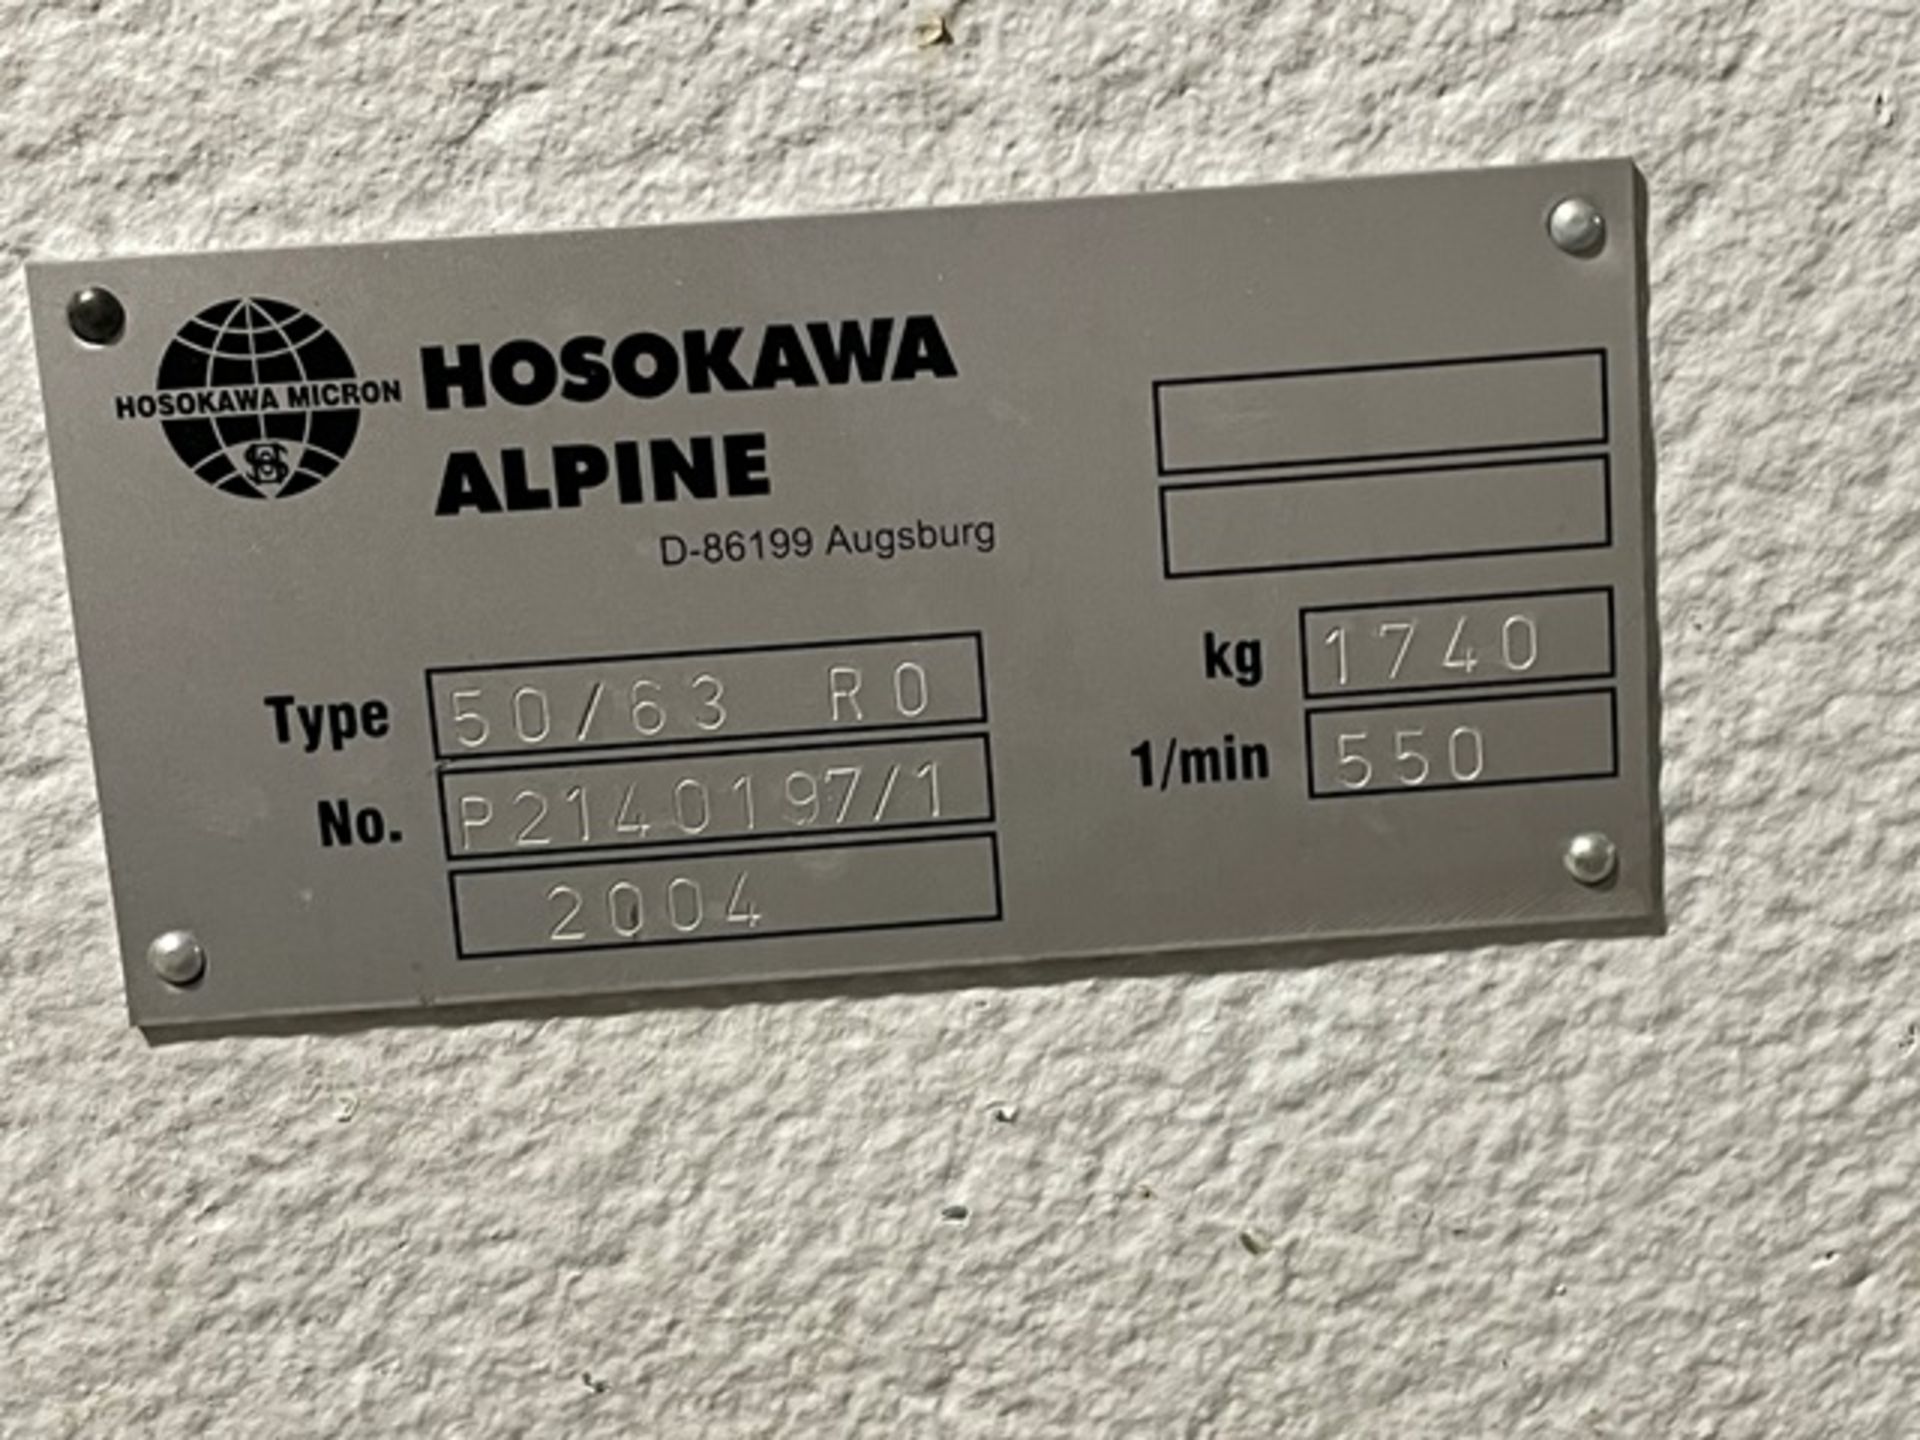 Hosokawa Alpine Type 50/63/RO, Rigging & Loading Fee: $1400 - Image 3 of 4